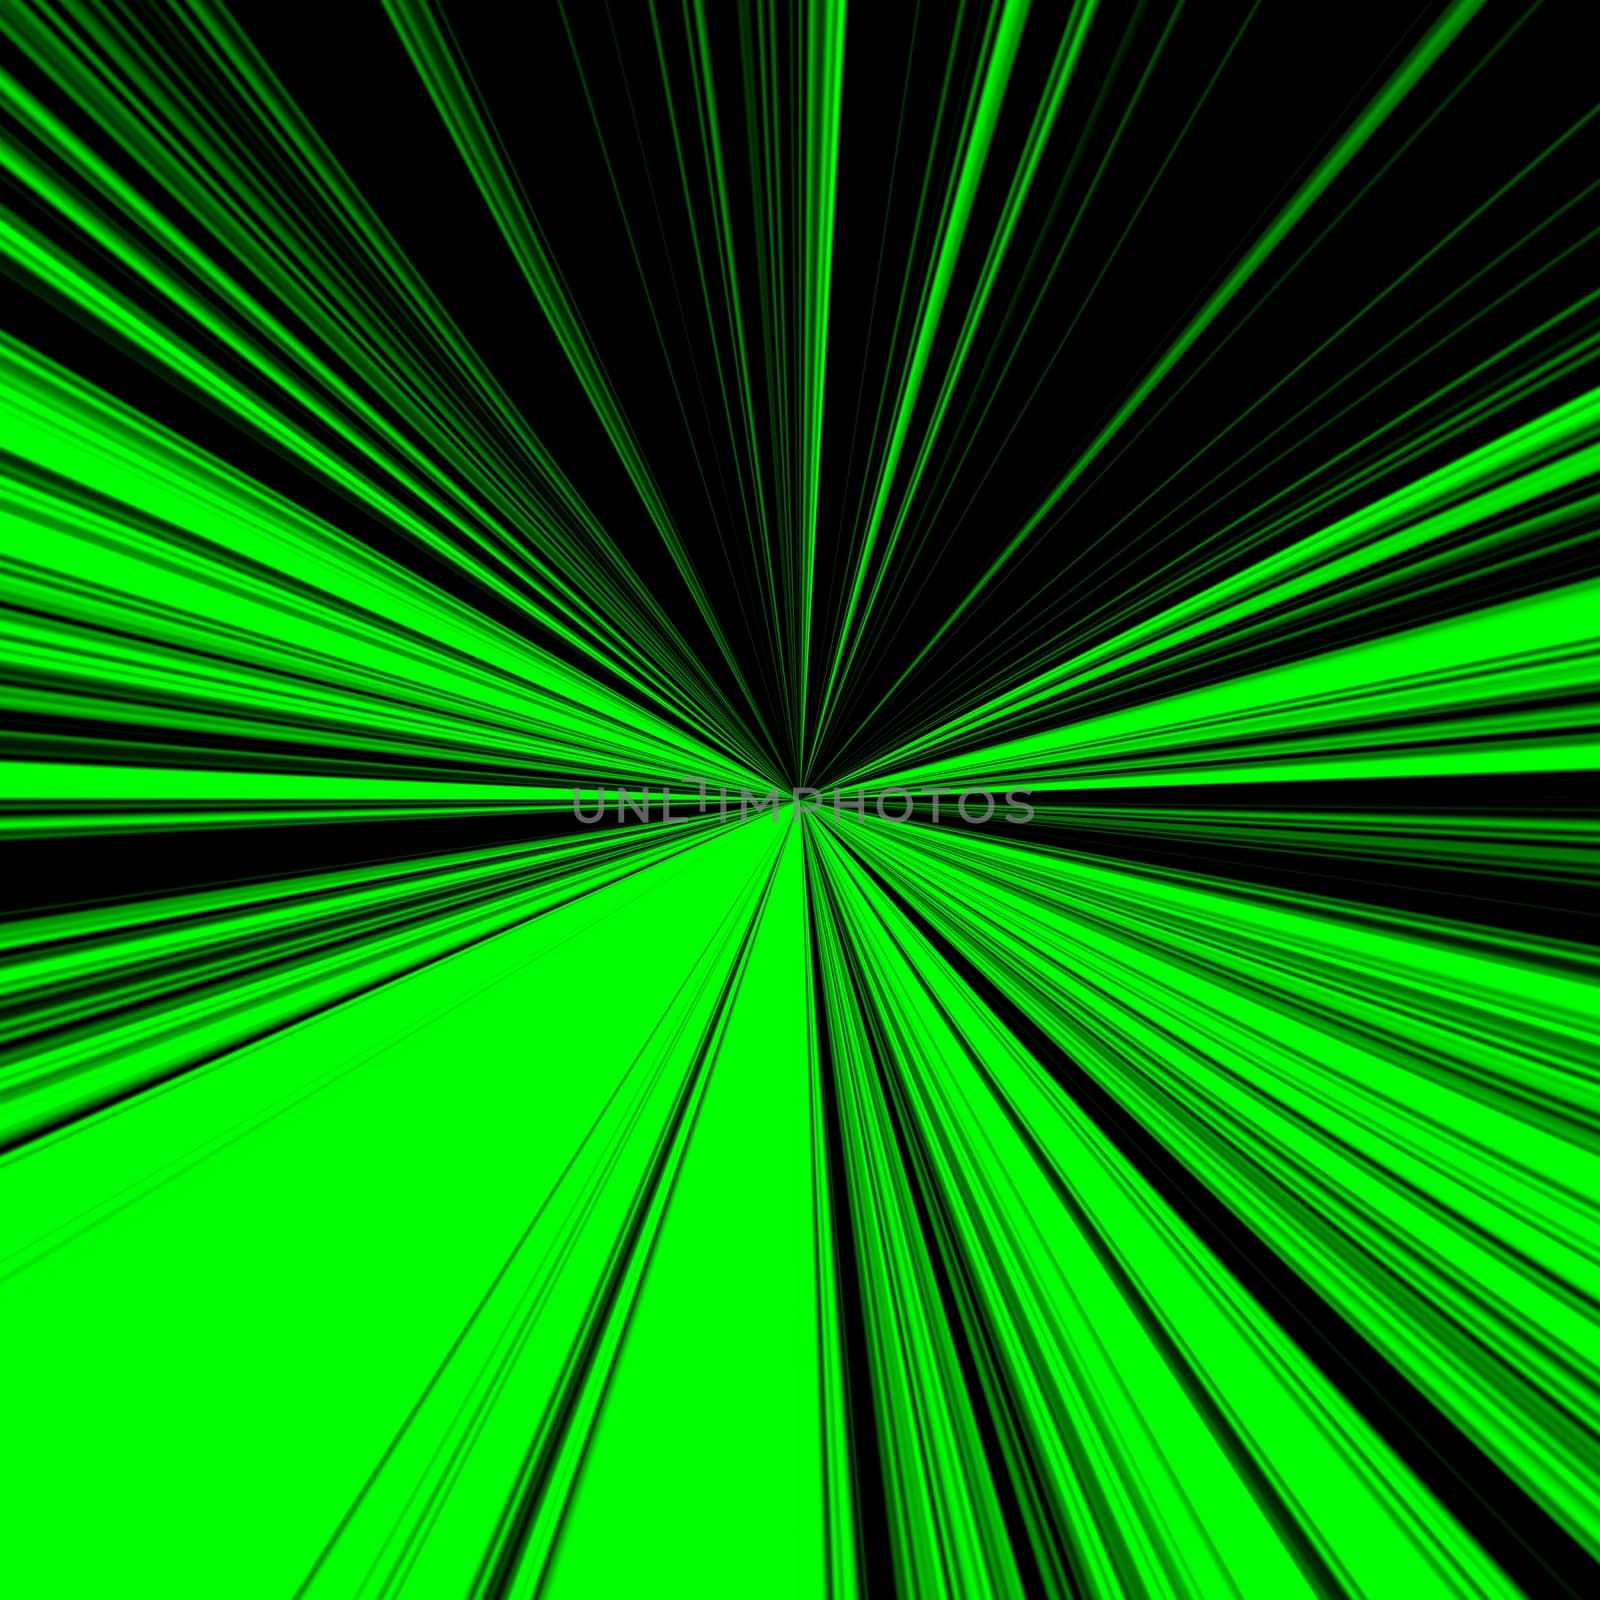 background of black green sunburst - digital high resolution.